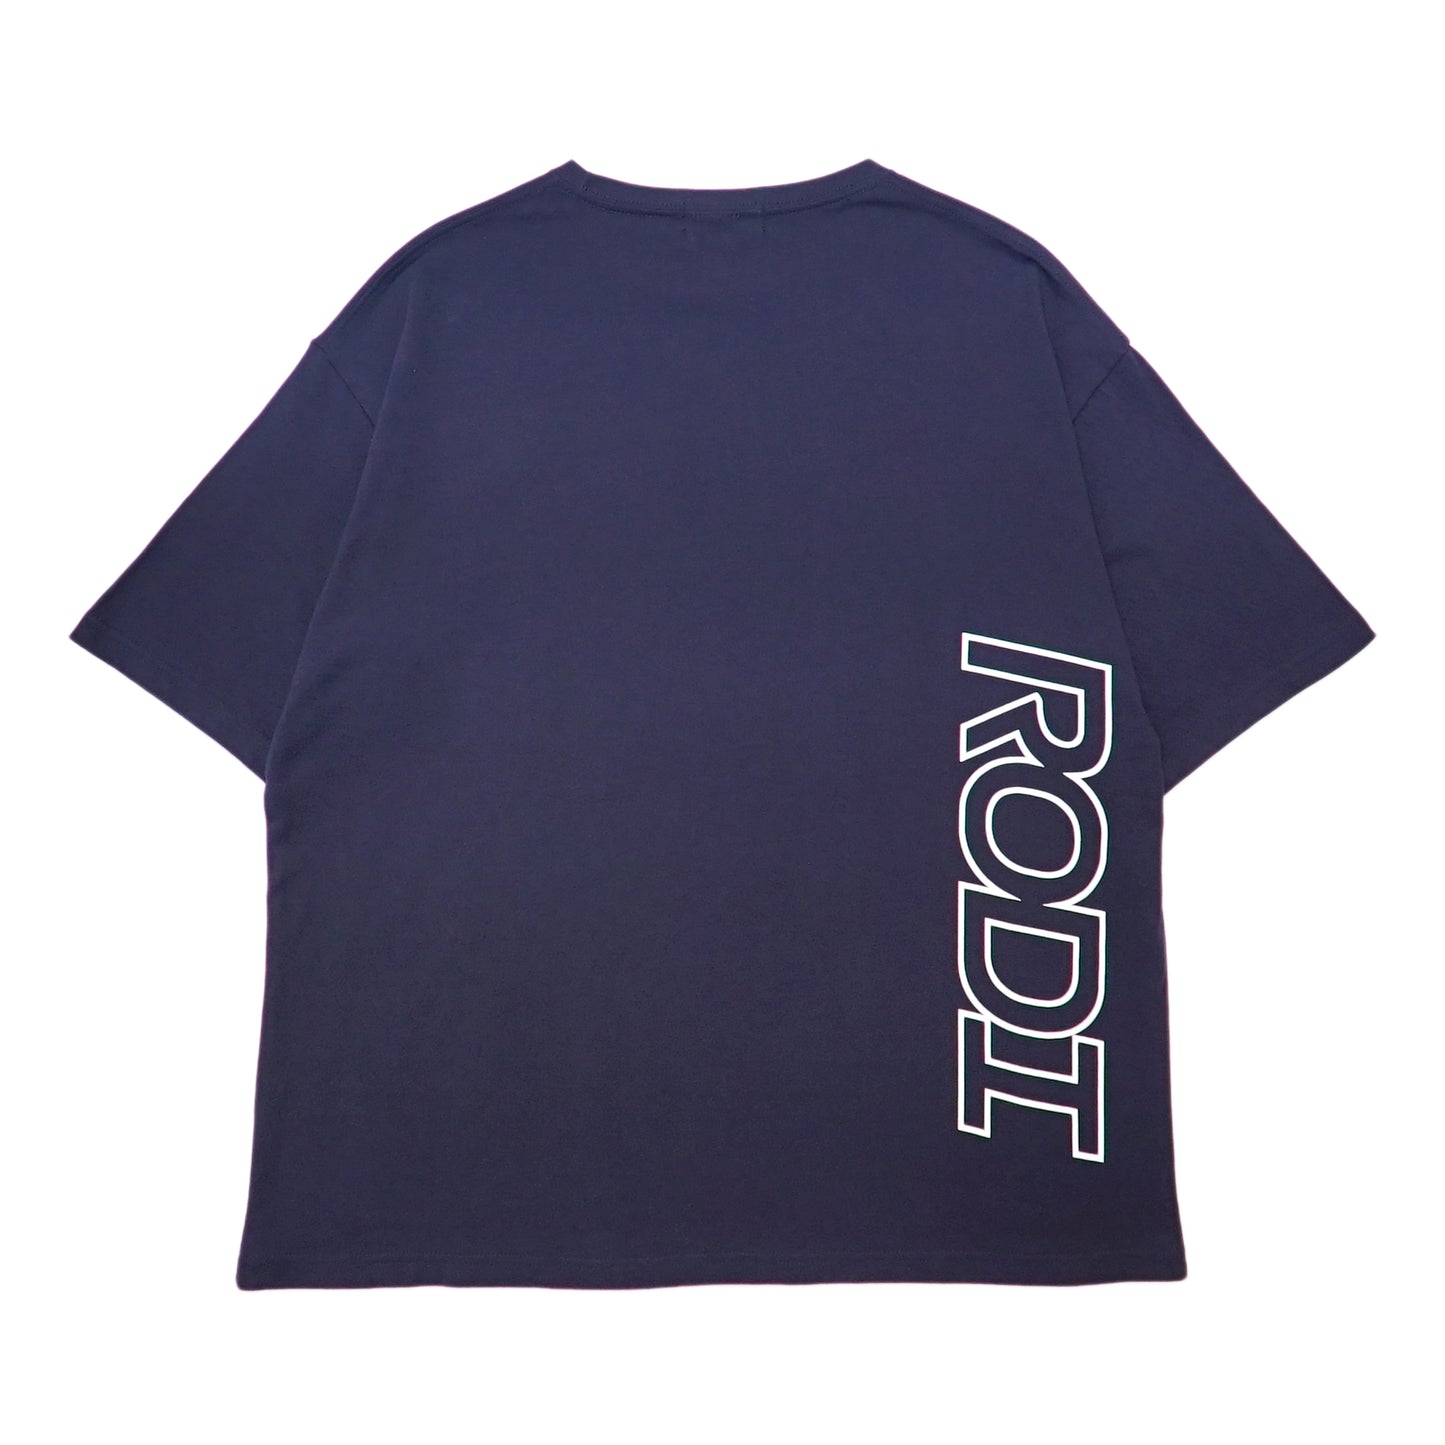 RODI - Creed T-Shirt/Navy